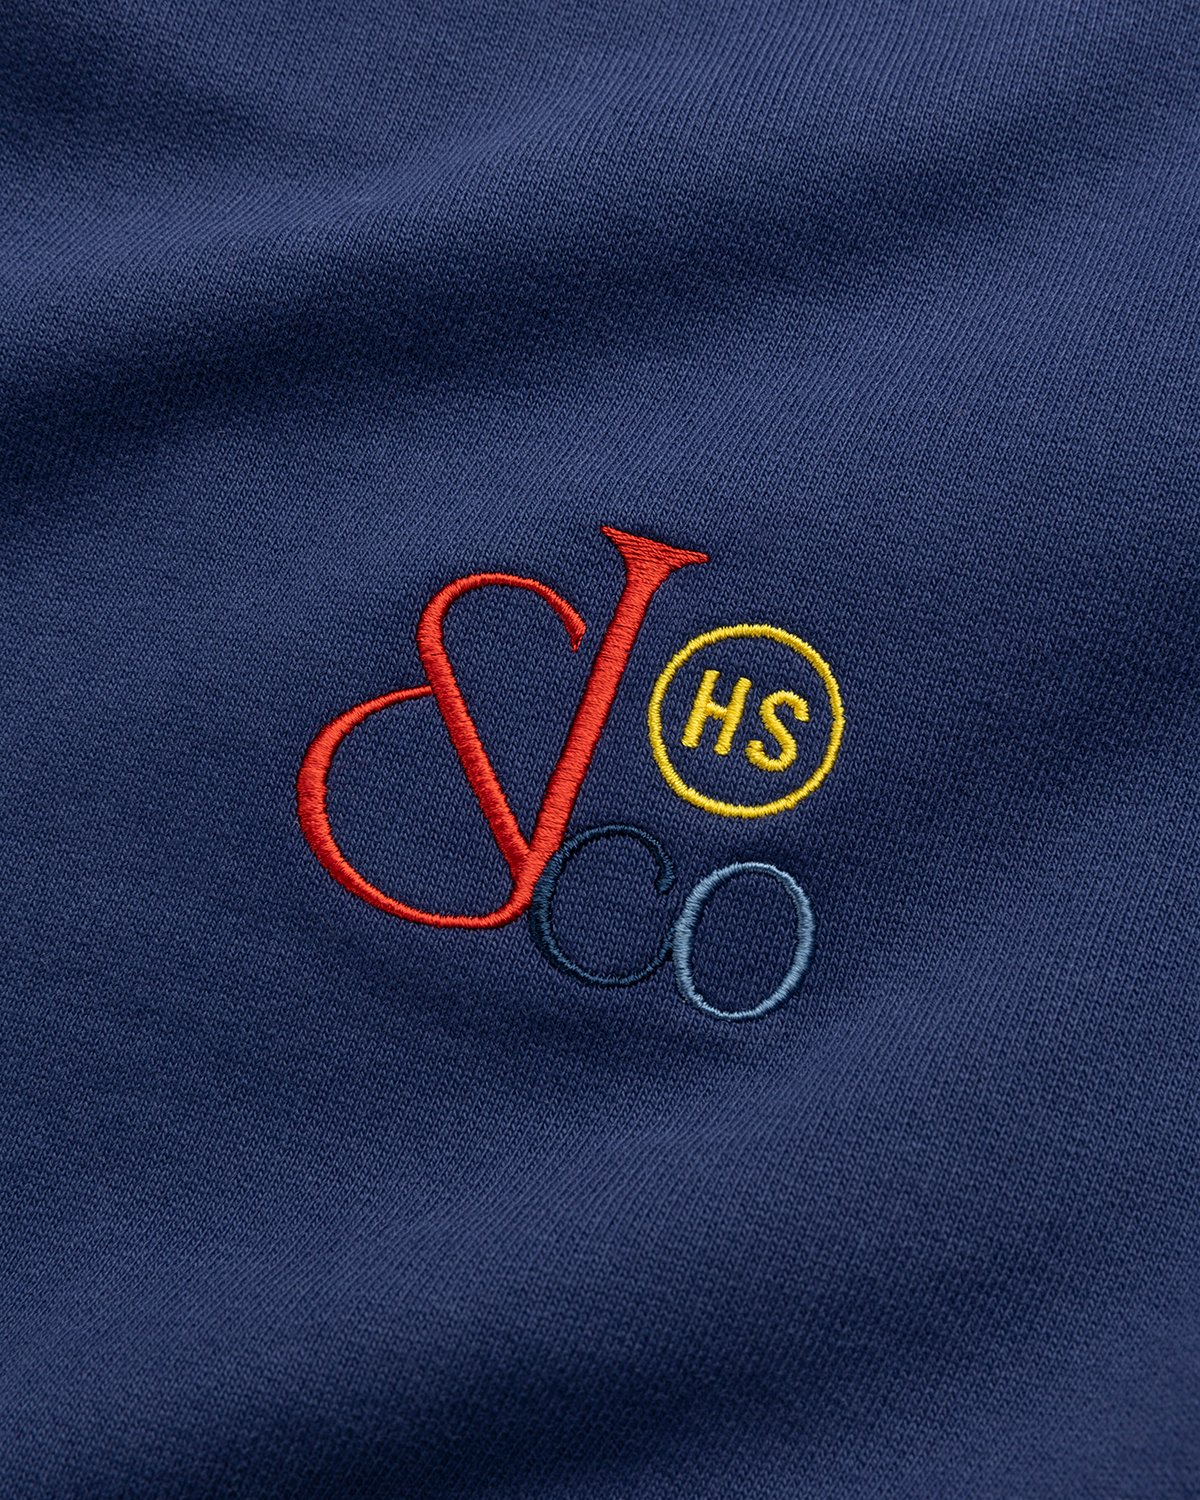 Jacob & Co. x Highsnobiety - Logo Fleece Pants Navy - Clothing - Black - Image 5